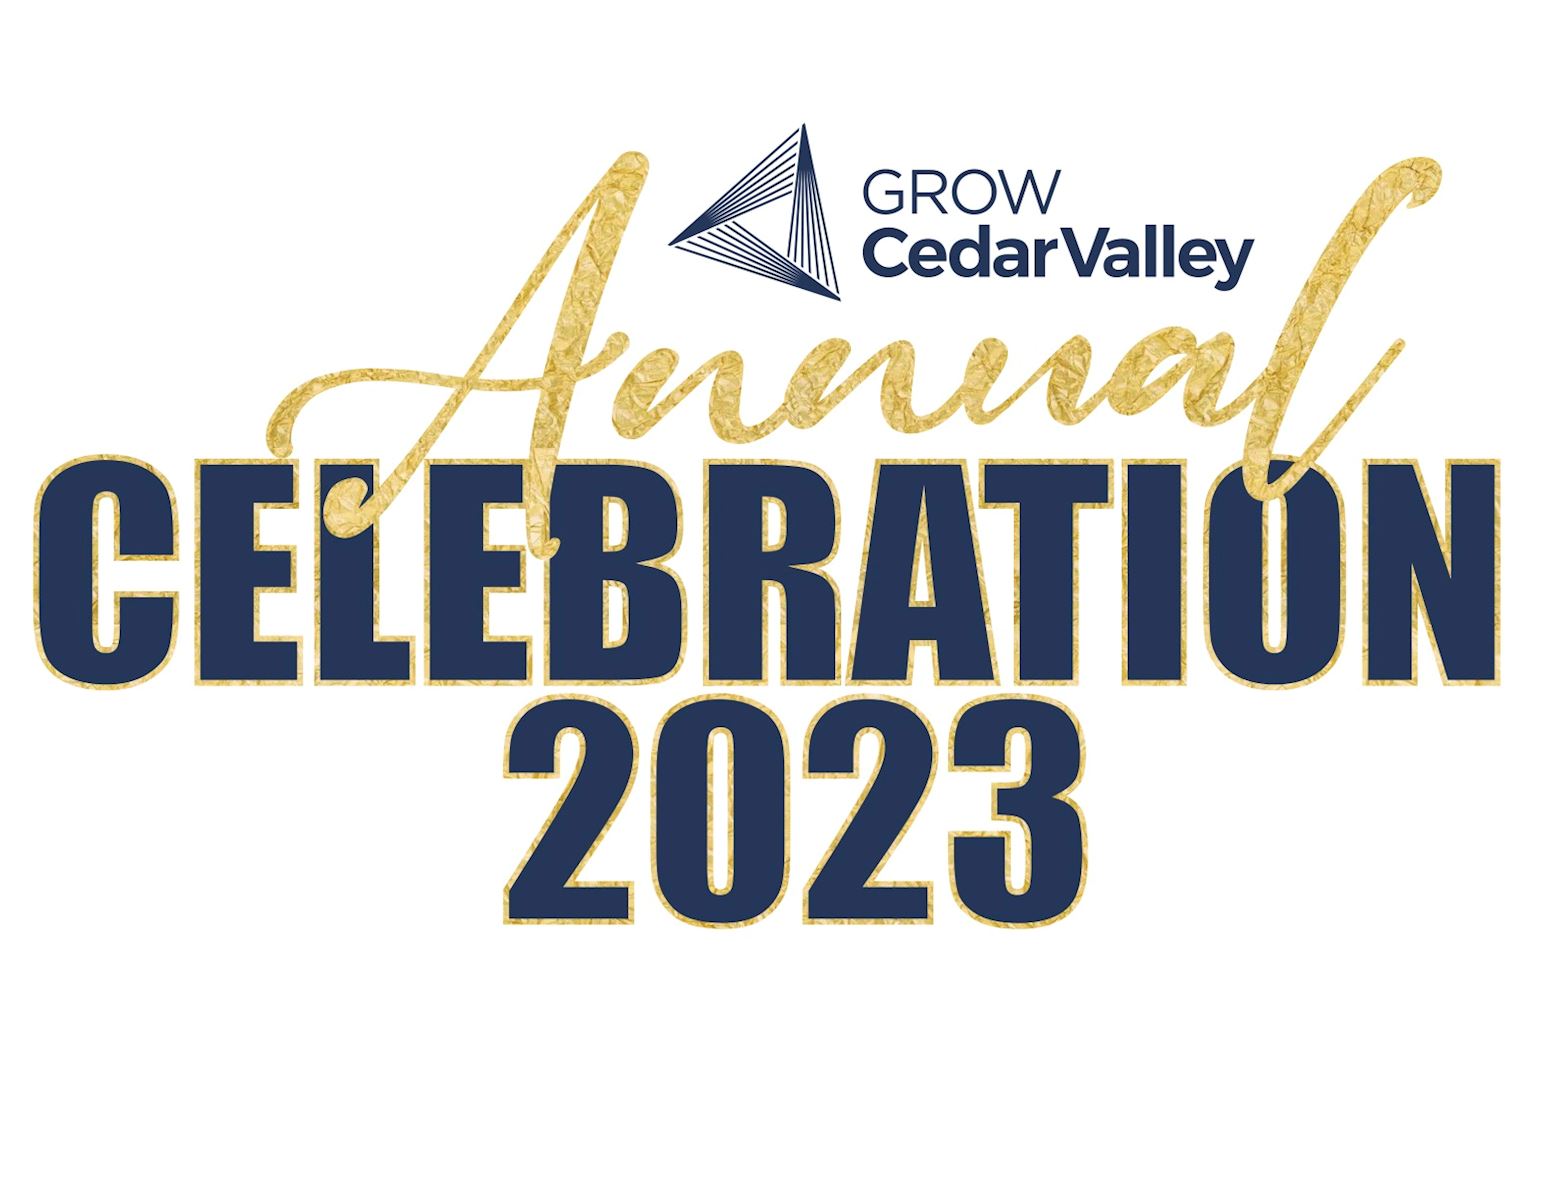 2023 Annual Celebration